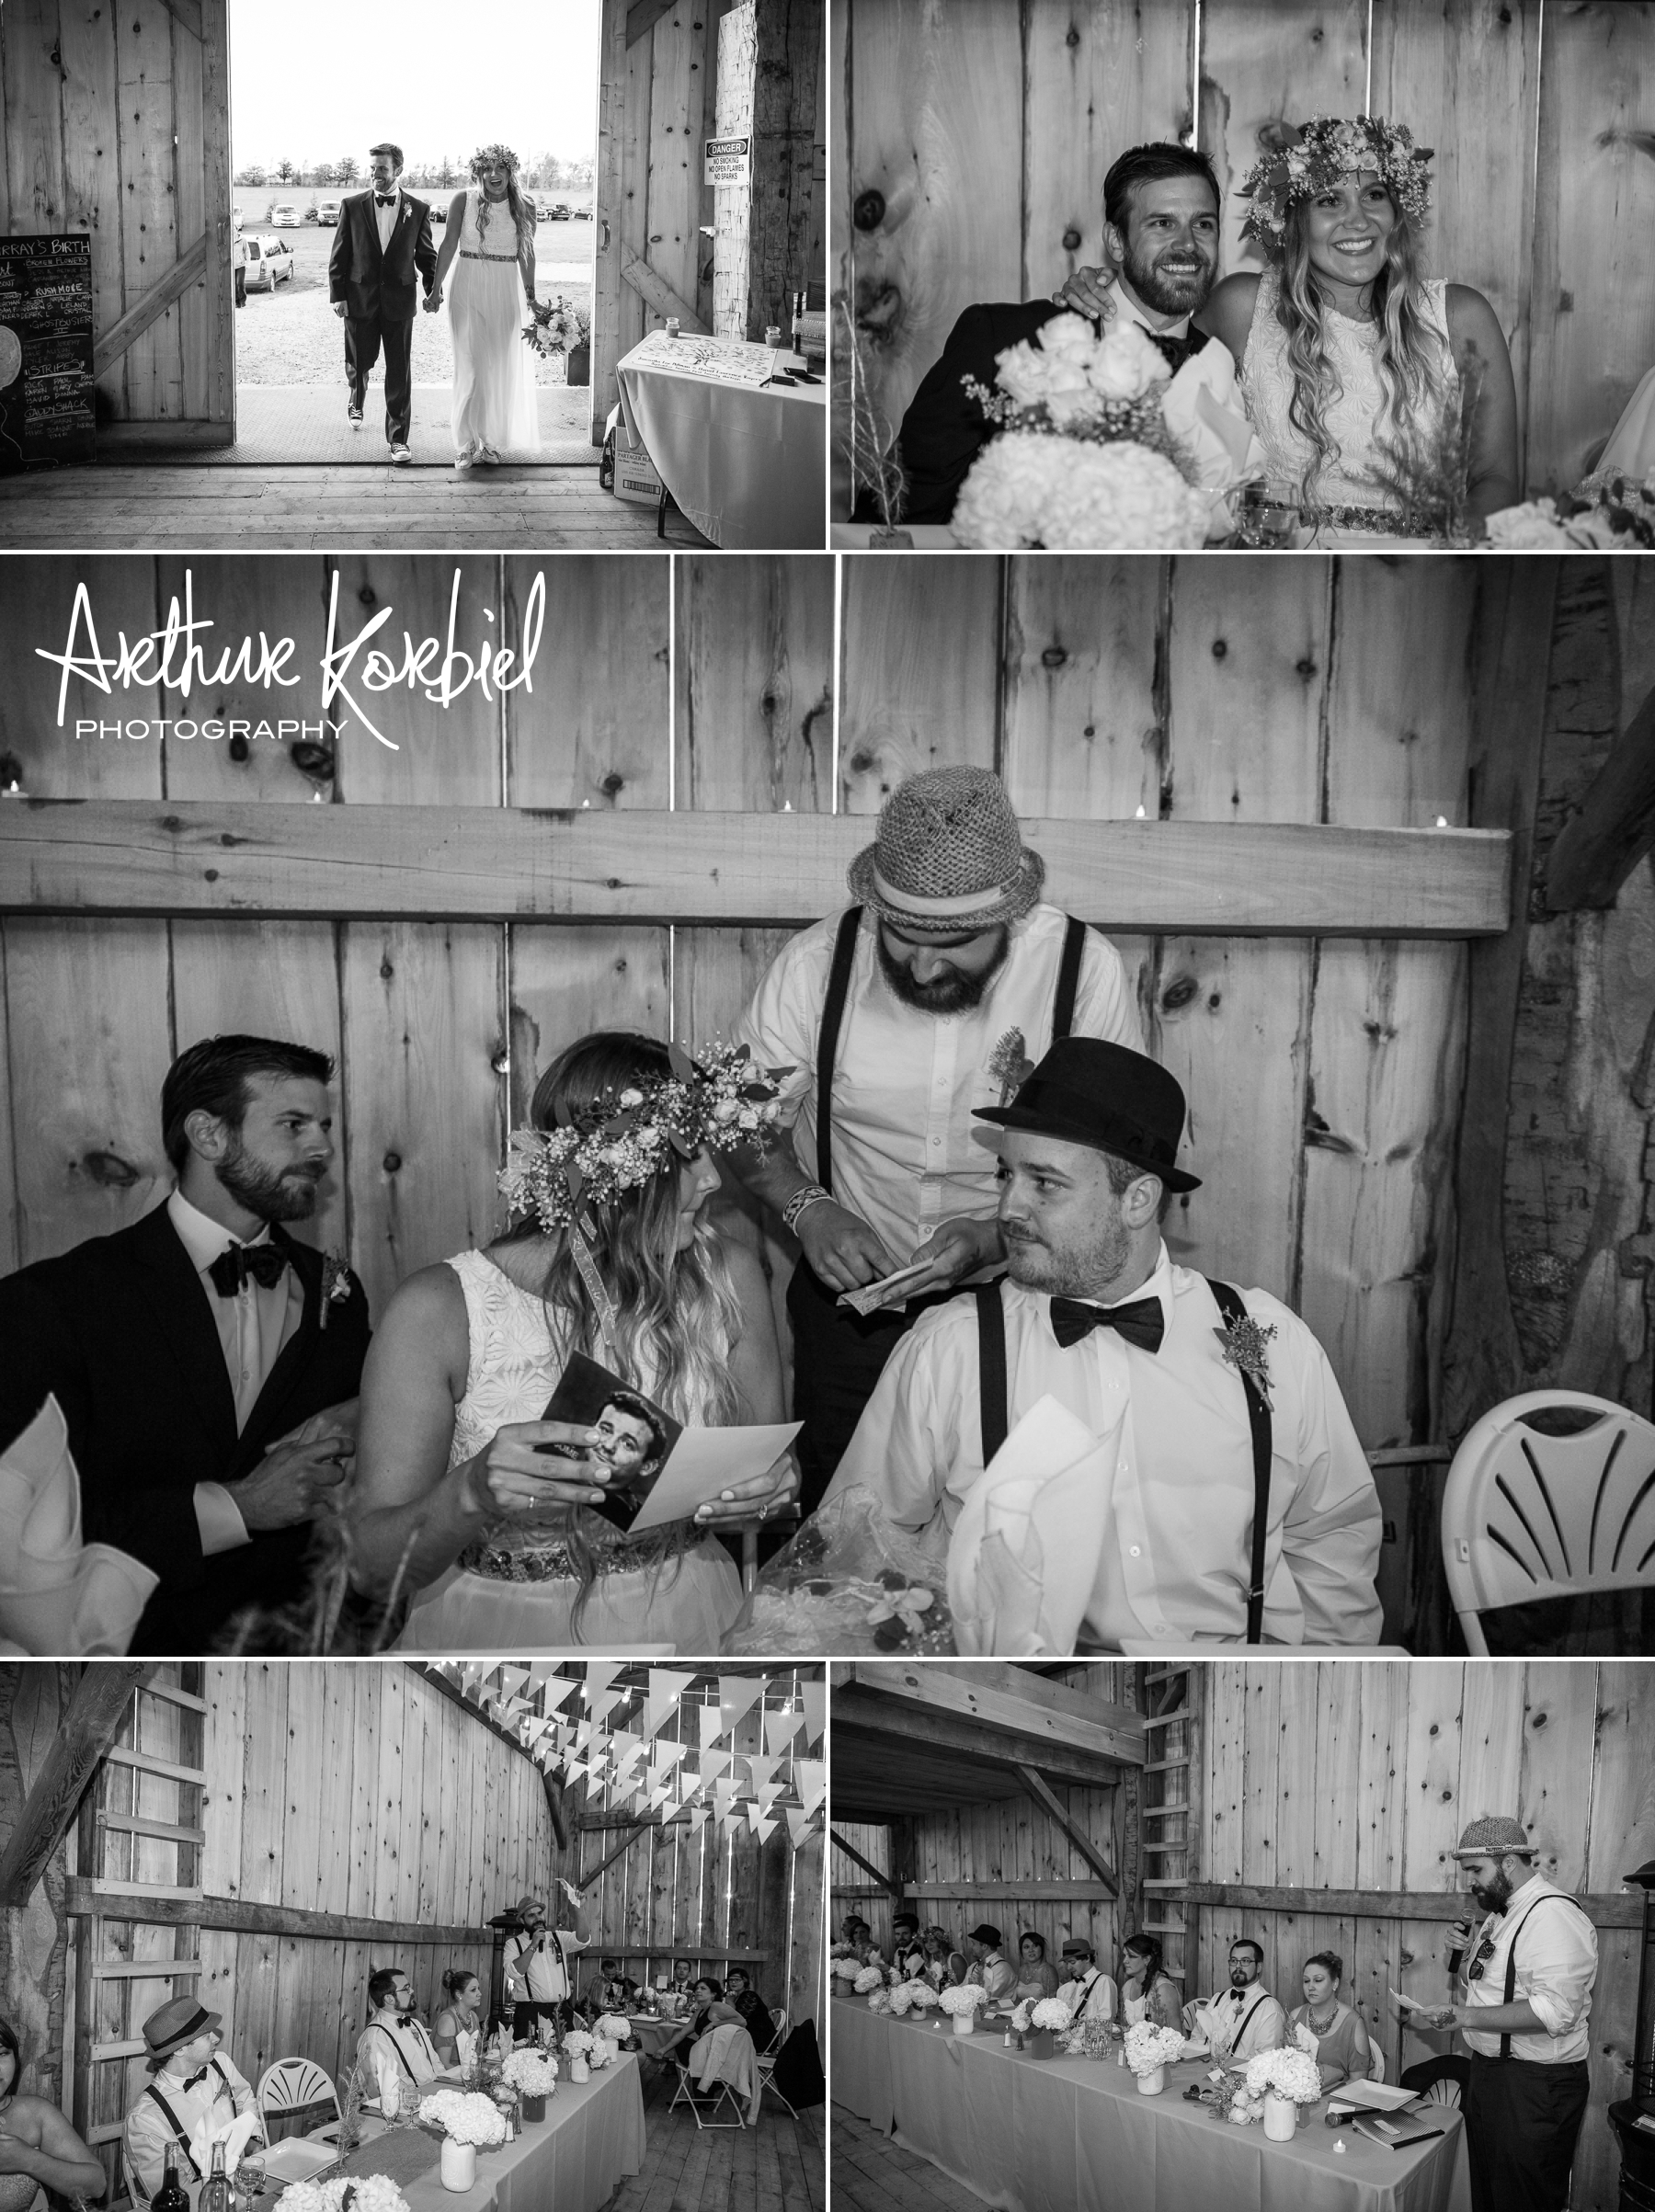 Arthur Korbiel Photography - London Engagement Photographer - Sauble Beach Barn Wedding - Samantha & Dan_011.jpg